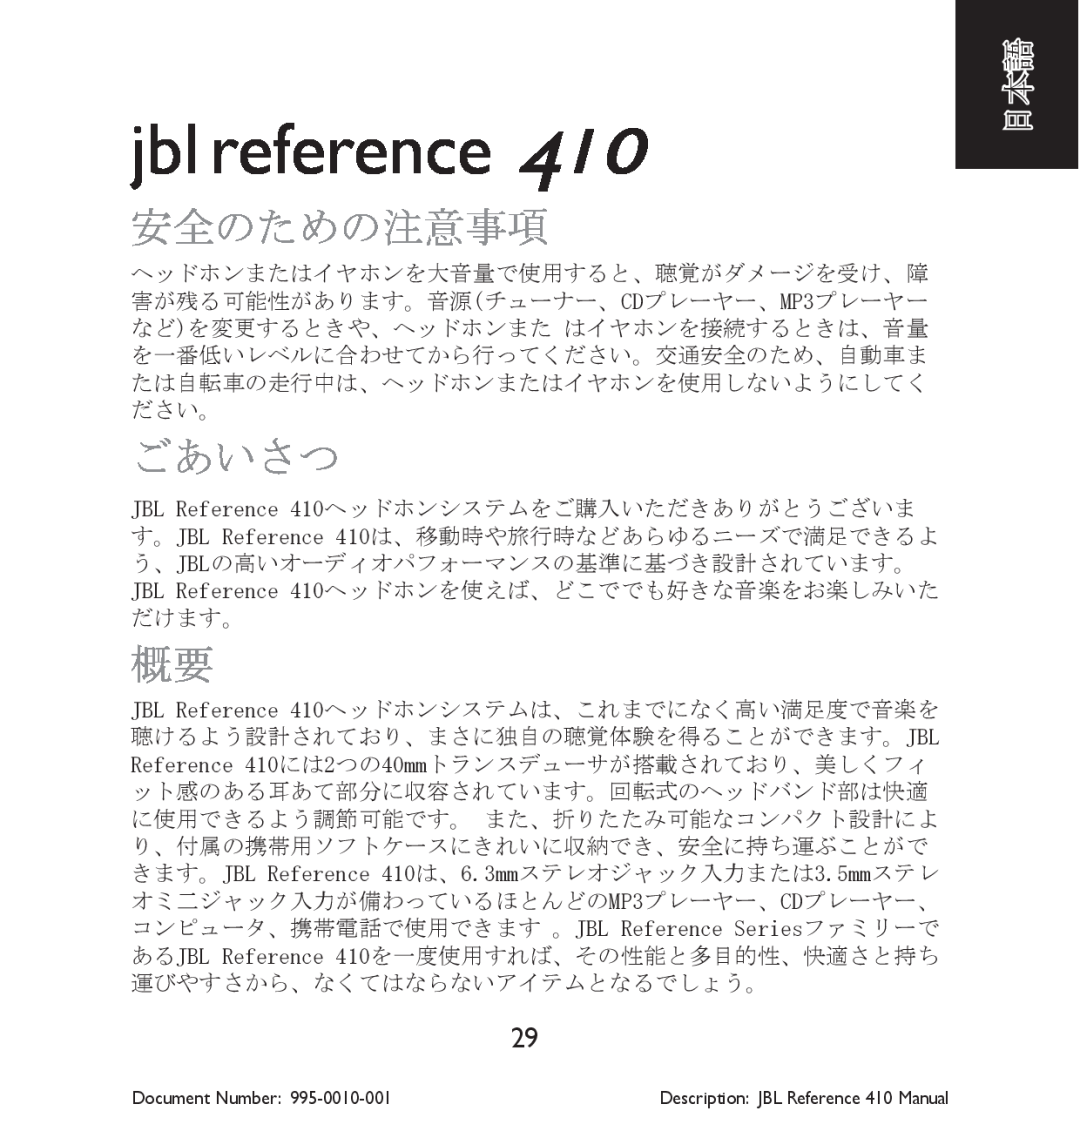 JBL 410 manual 安全のための注意事項, ごあいさつ, jbl reference 